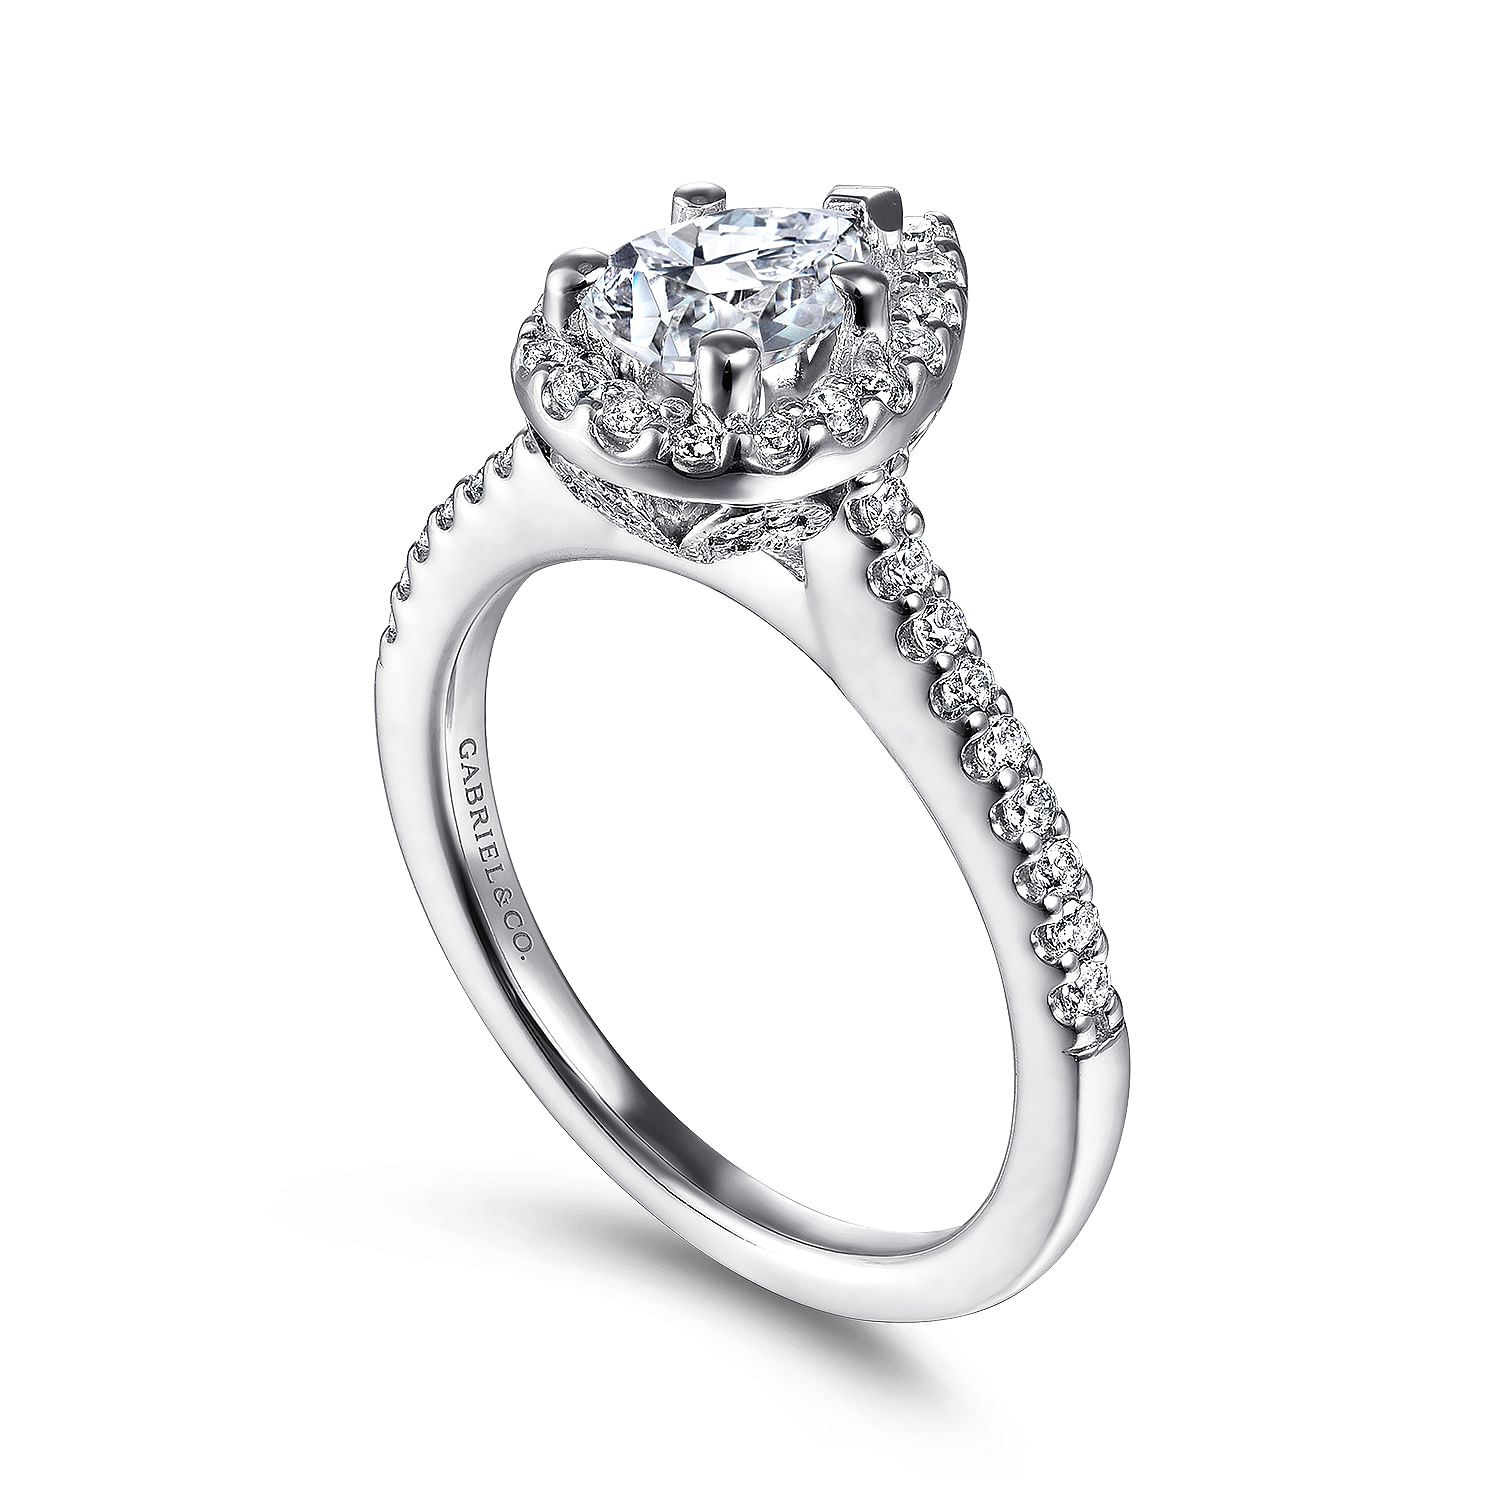 Paige - 14K White Gold Pear Shape Halo Diamond Engagement Ring